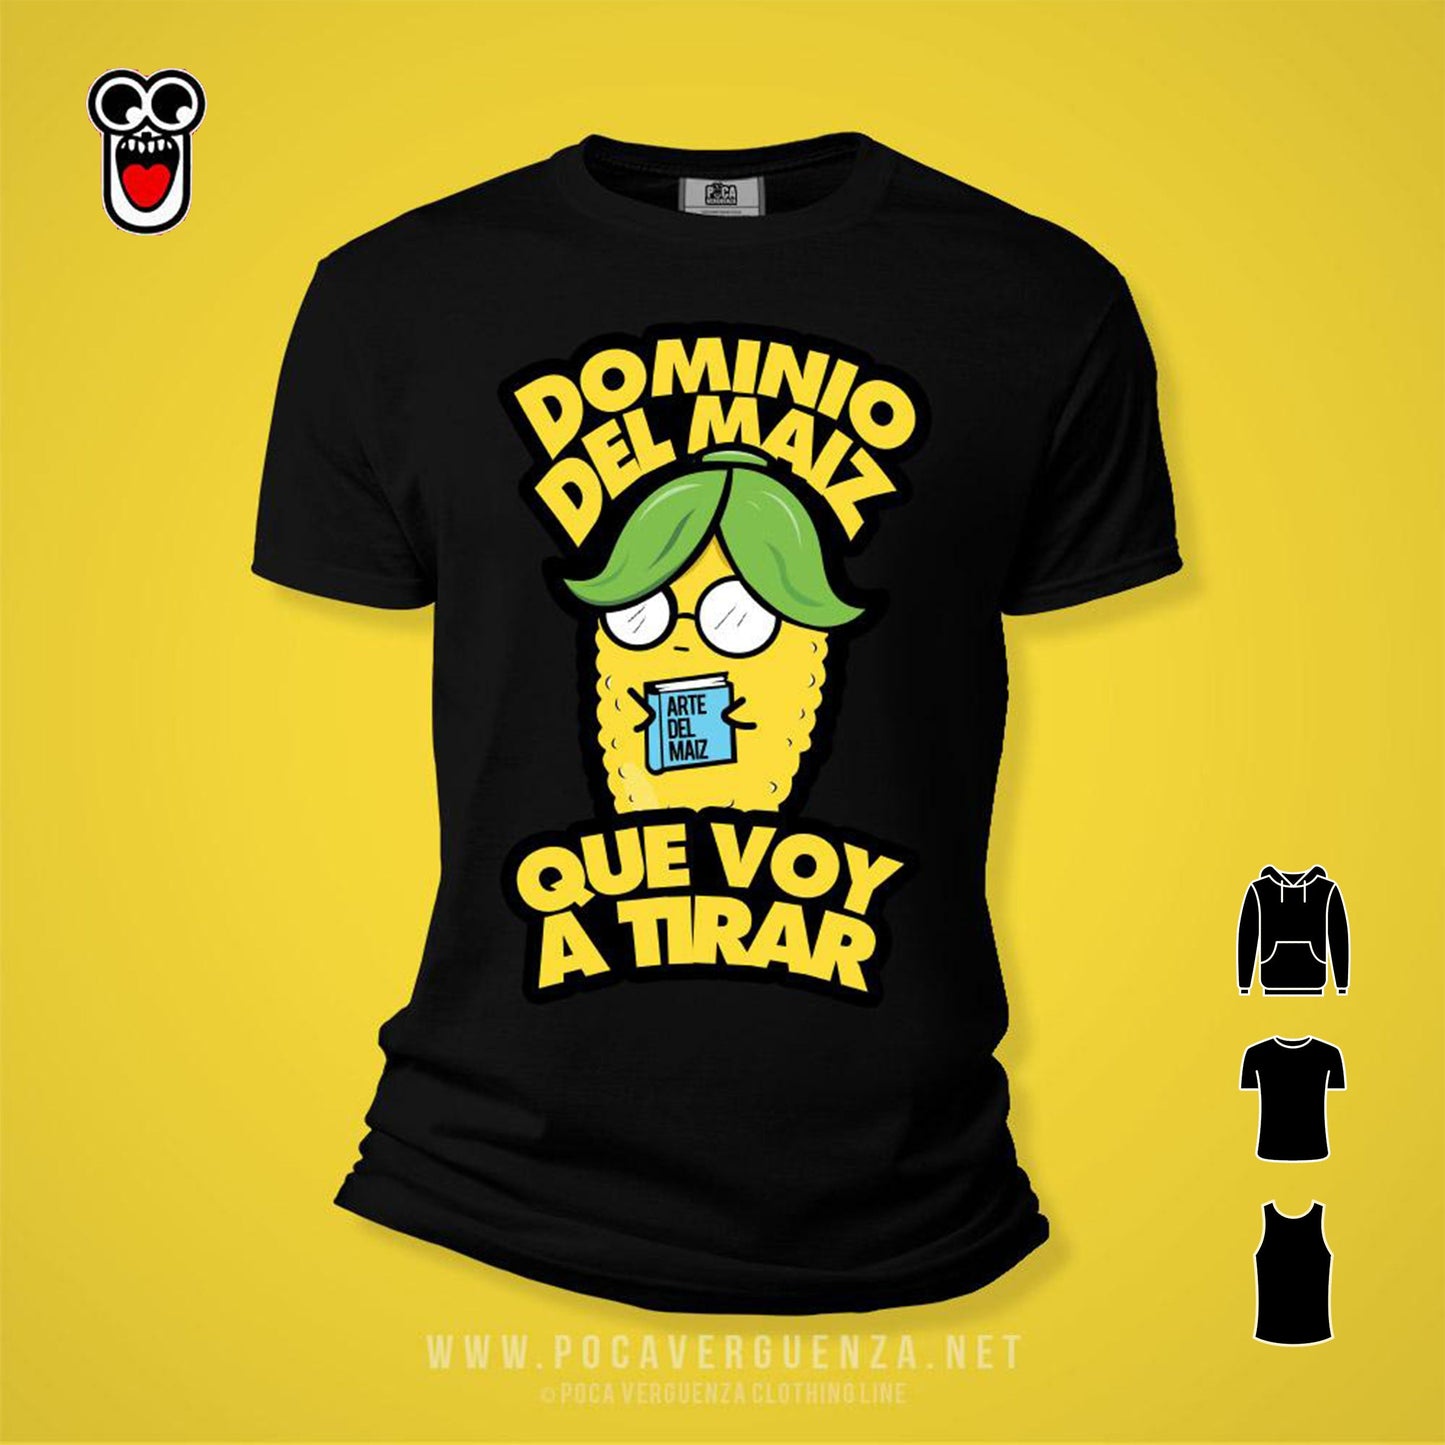 Dominio Del Maiz Que Voy Tirar pocaverguenzapr Camisetas (4551259553882)